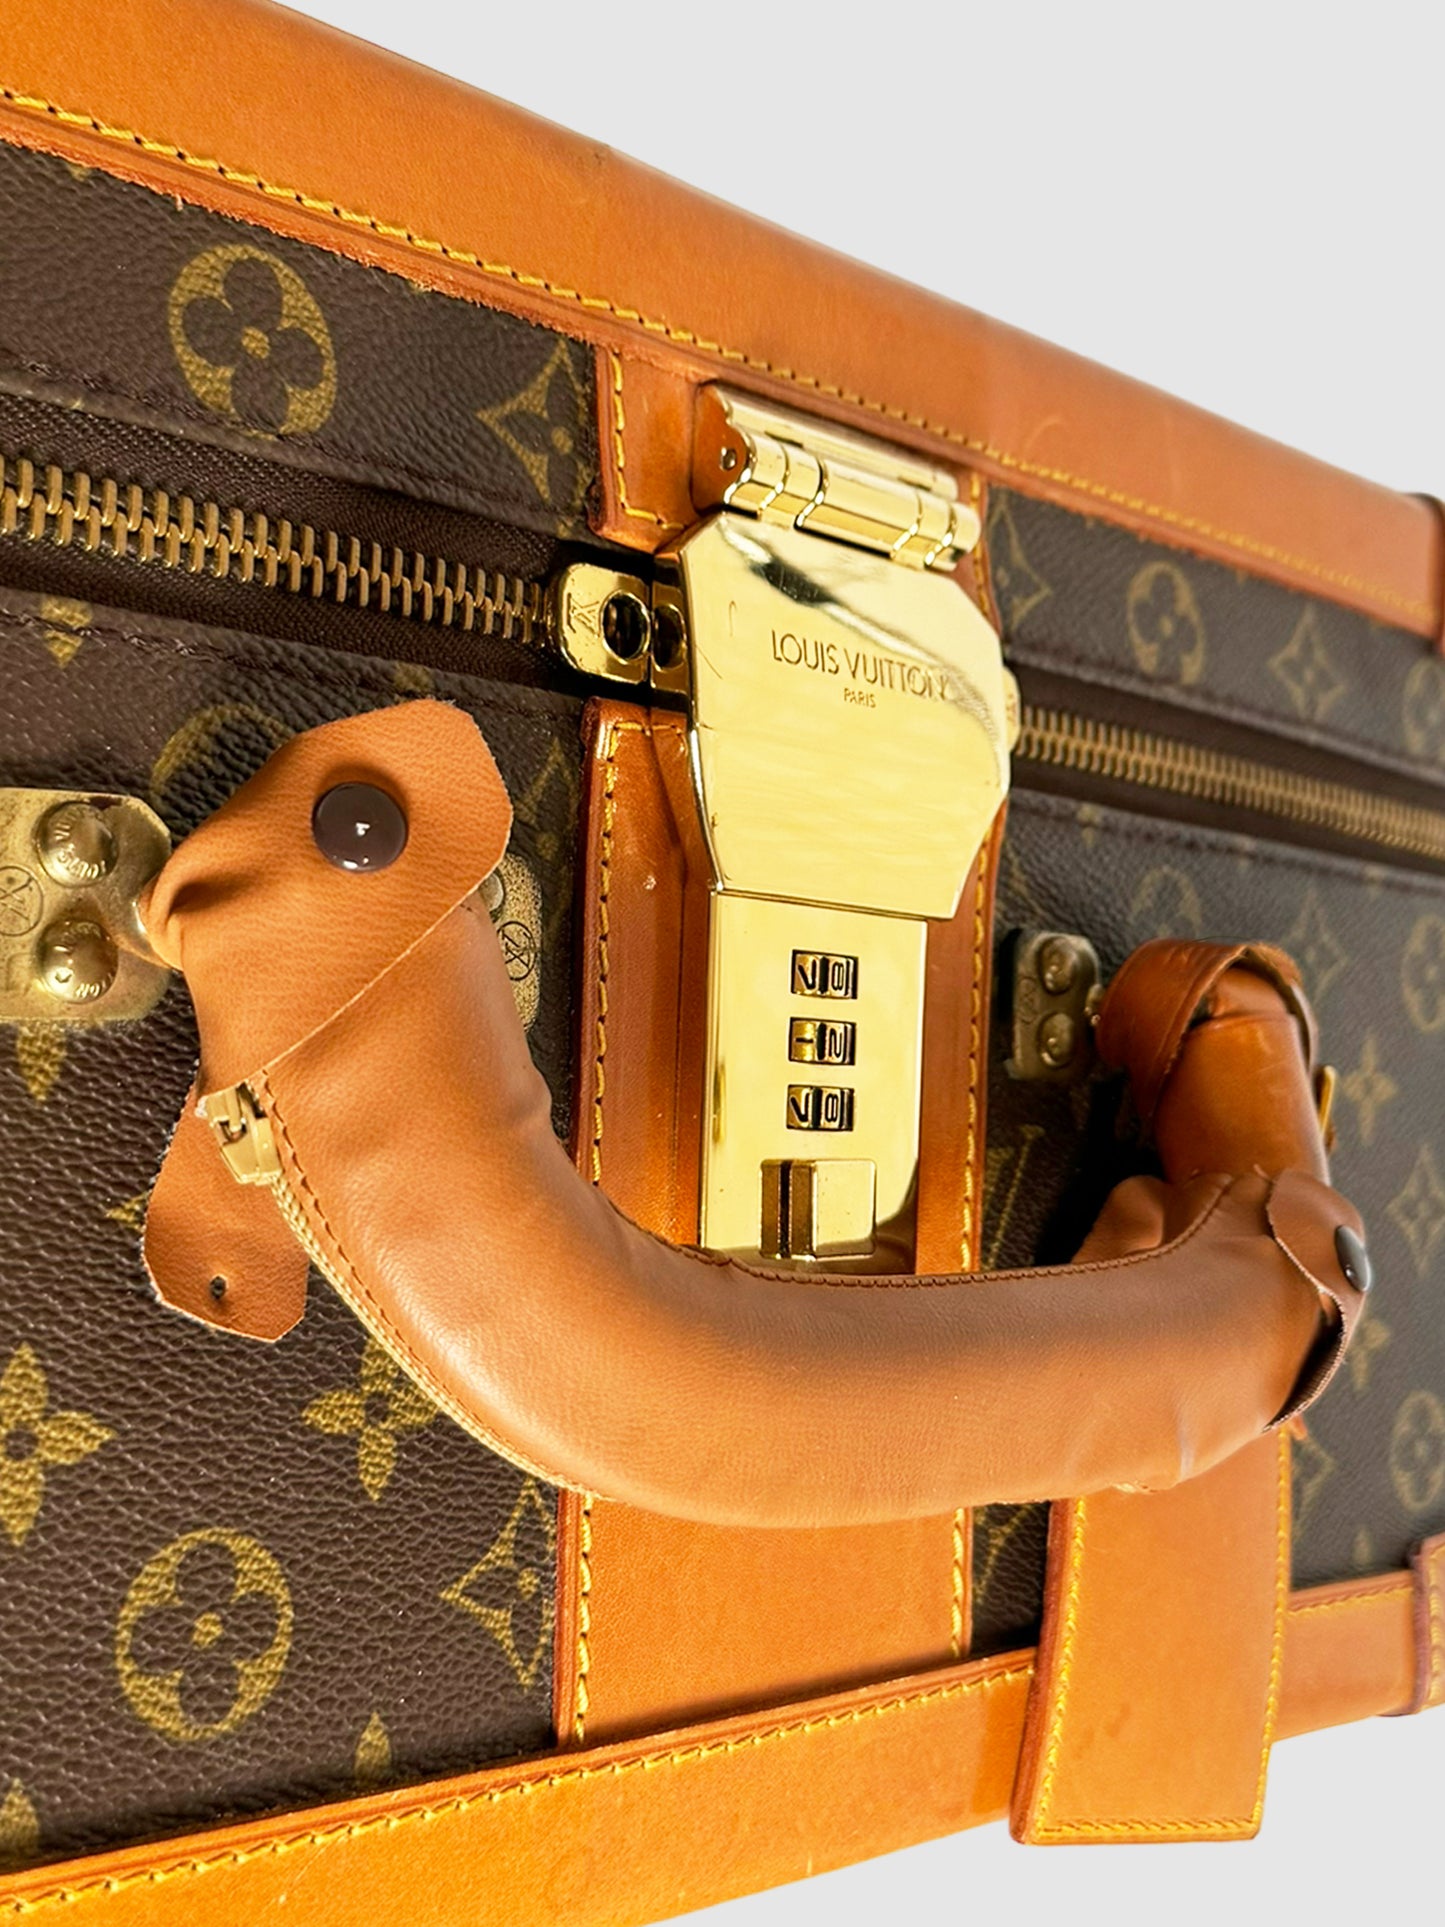 Monogram Leather Suitcase